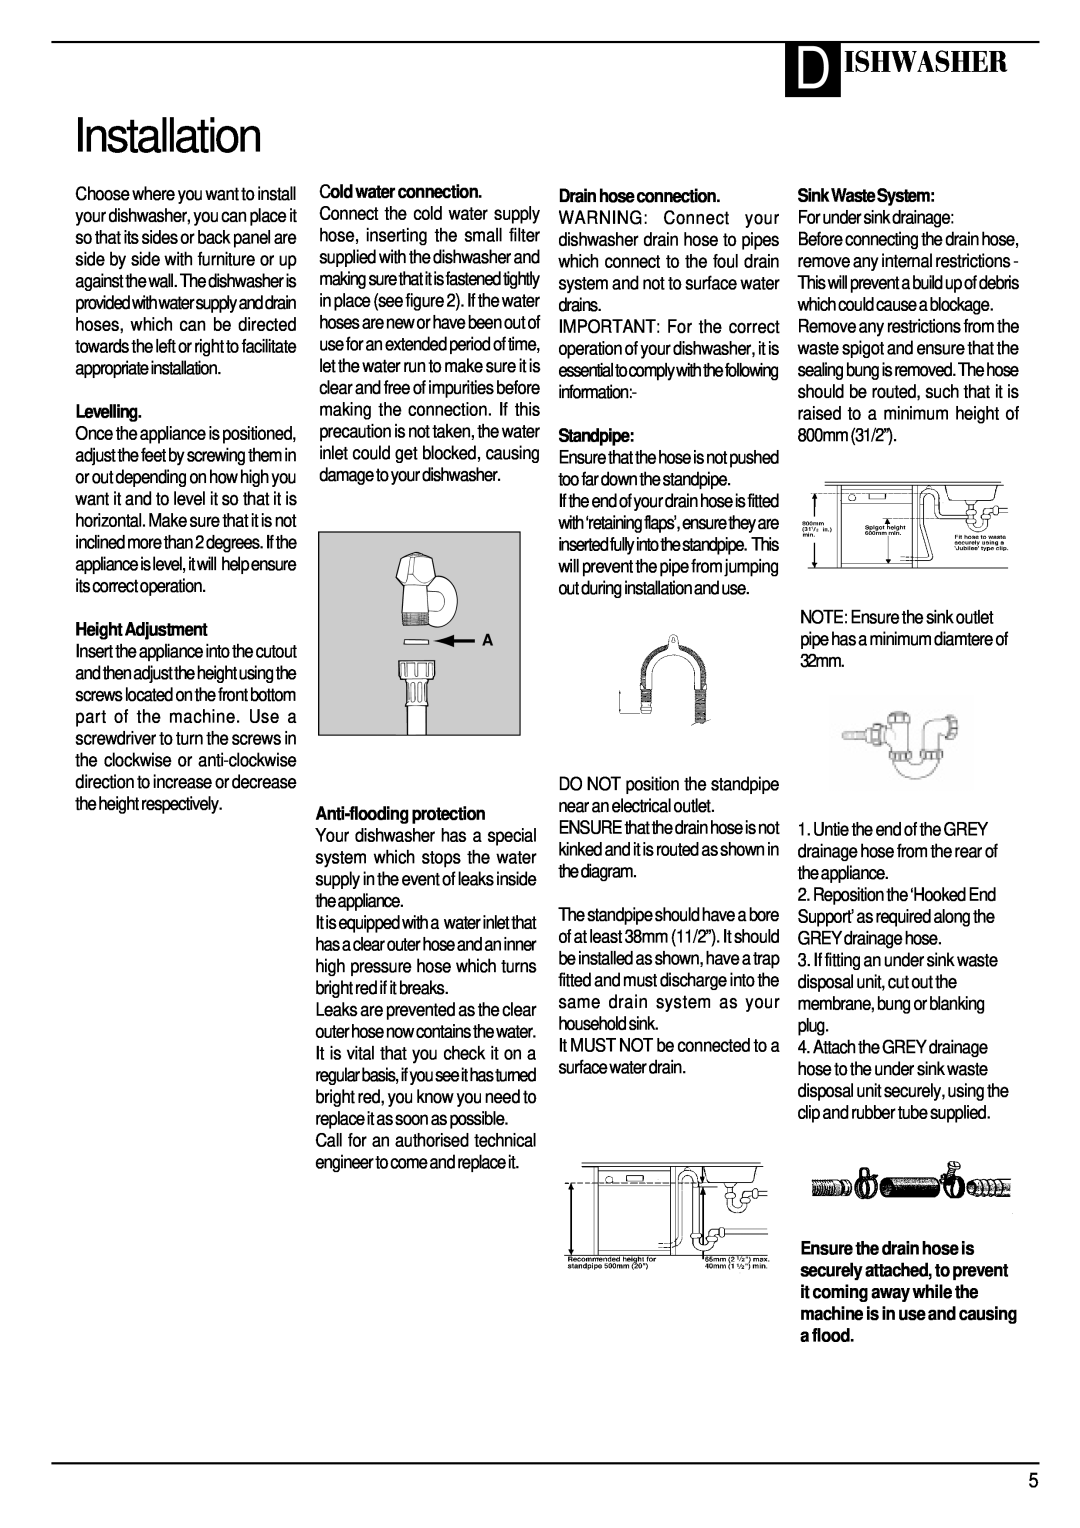 Hotpoint BFV68 manual Installation, D Ishwasher, Levelling, Height Adjustment, Anti-floodingprotection, Standpipe 